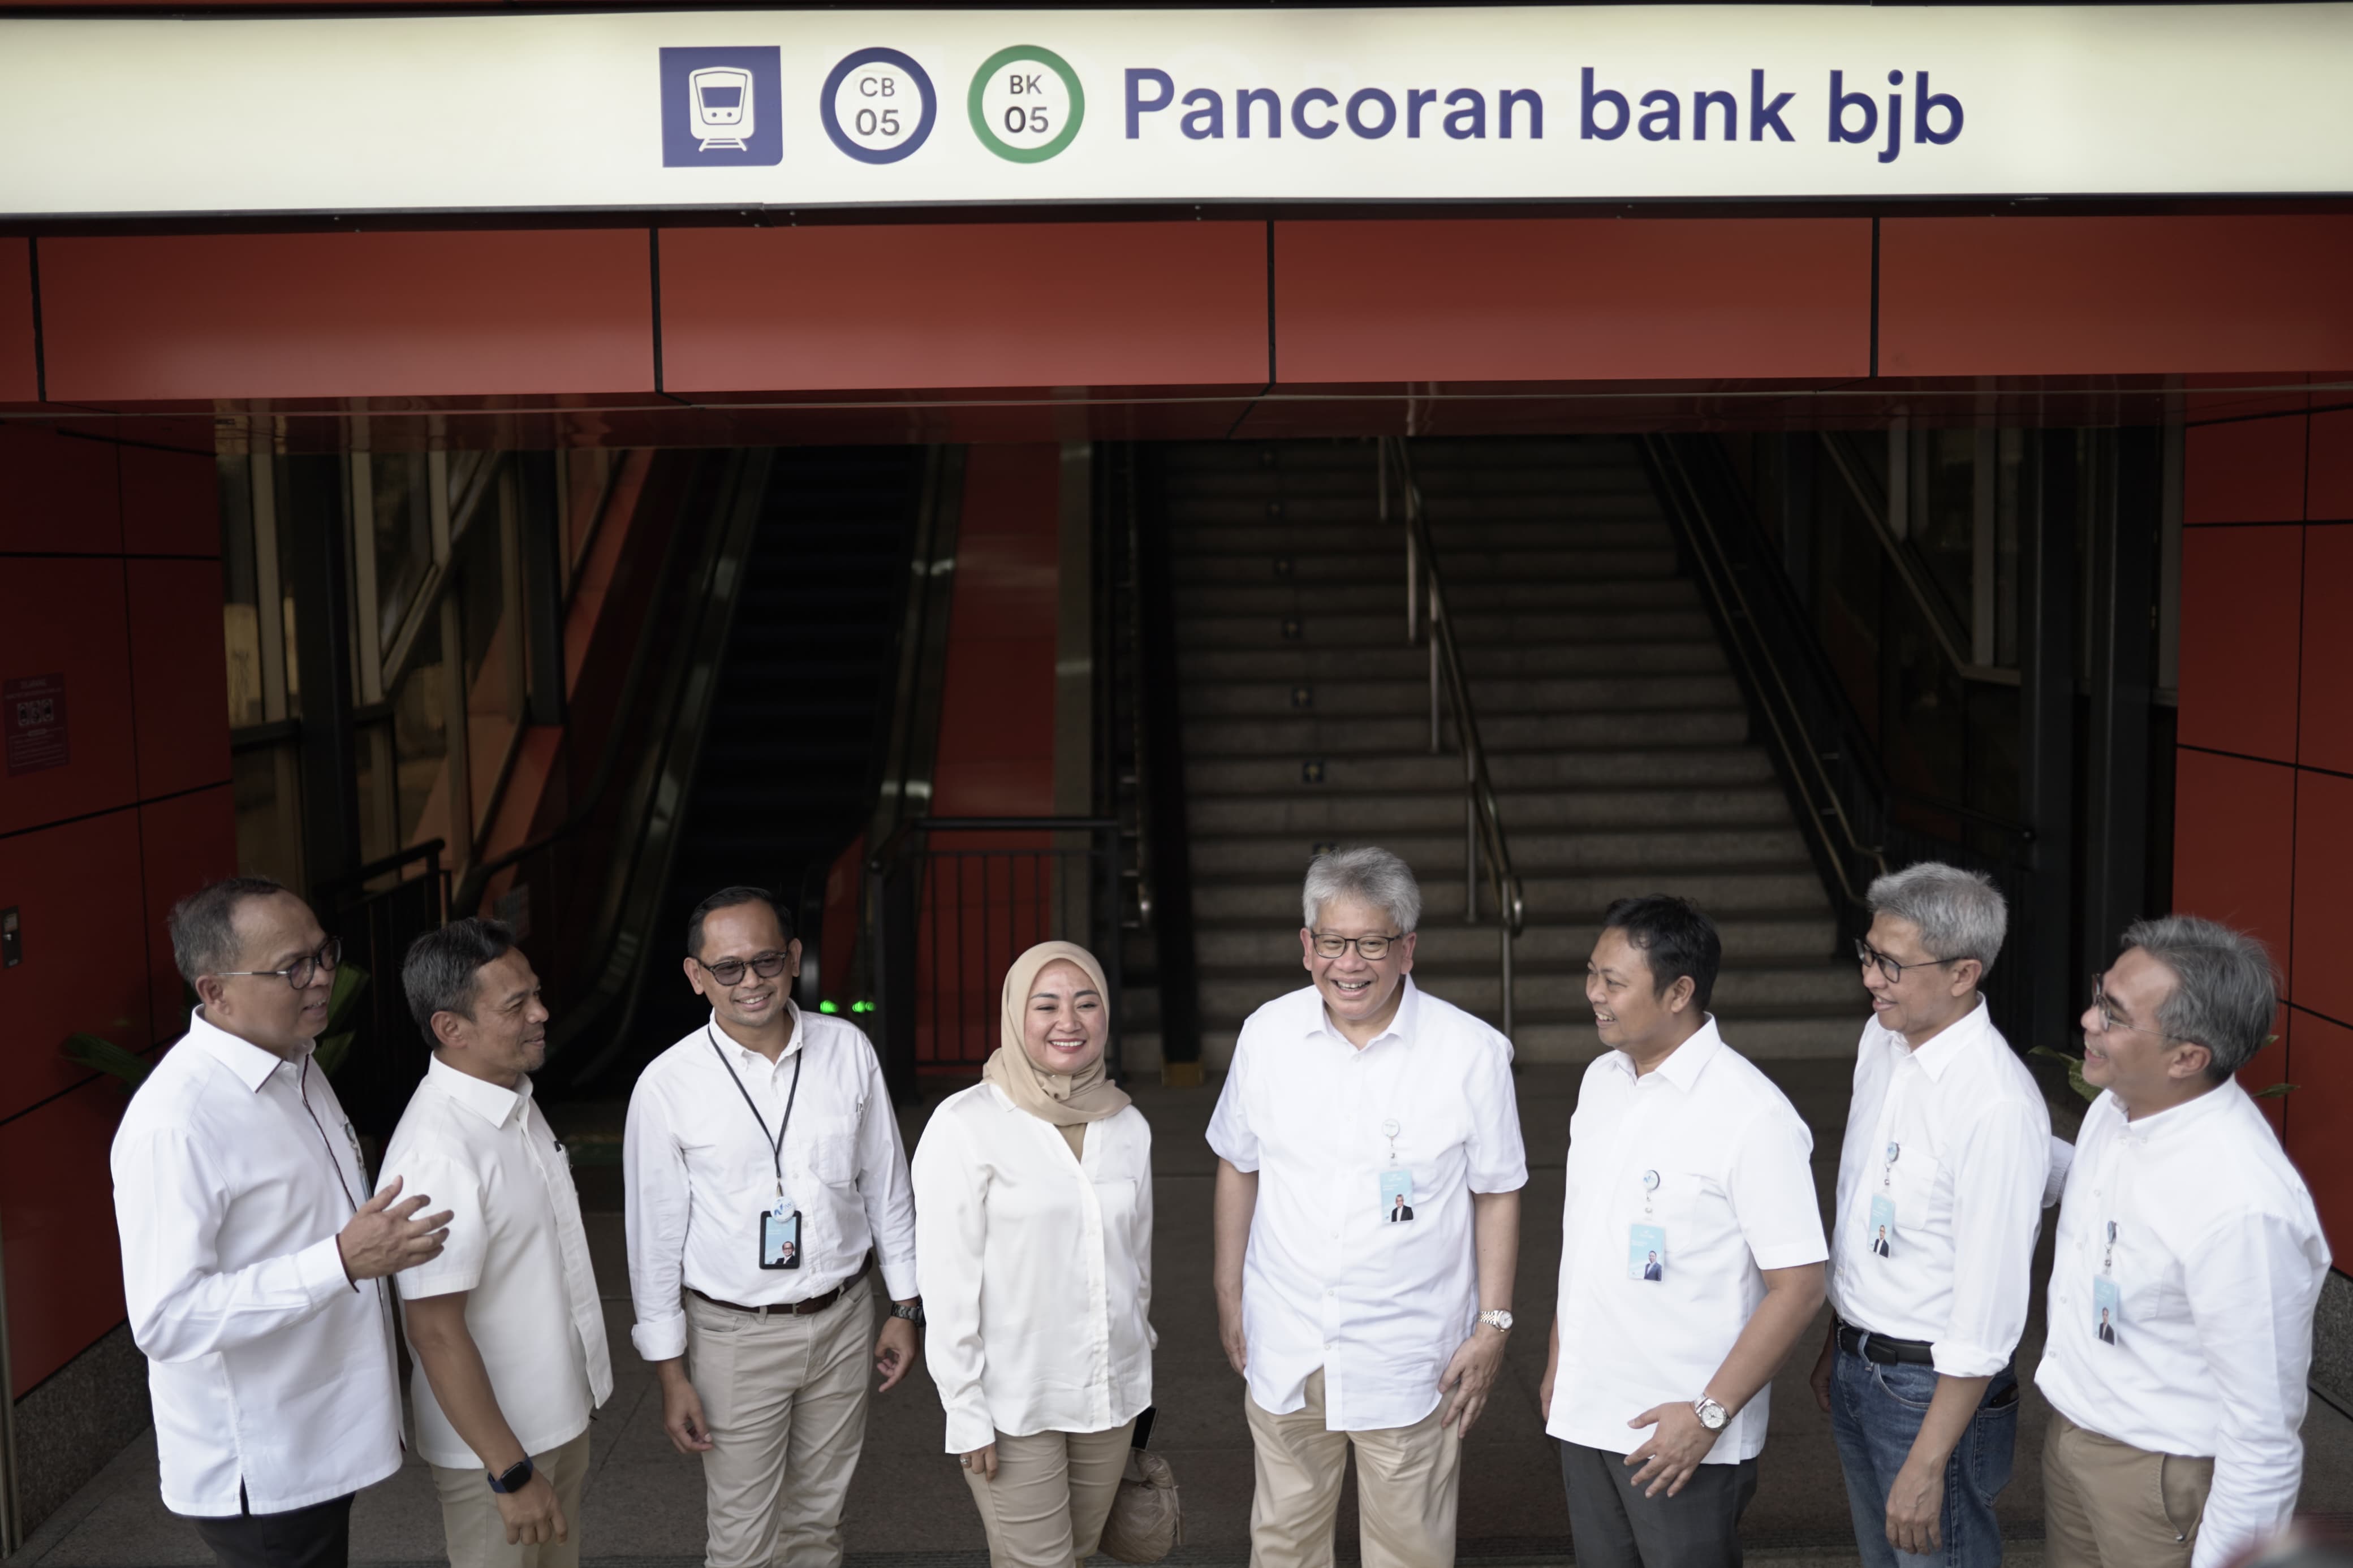 bank bjb Menjalin Kolaborasi dengan KAI Melalui Penamaan Stasiun LRT Jabodebek 'Pancoran bank bjb'